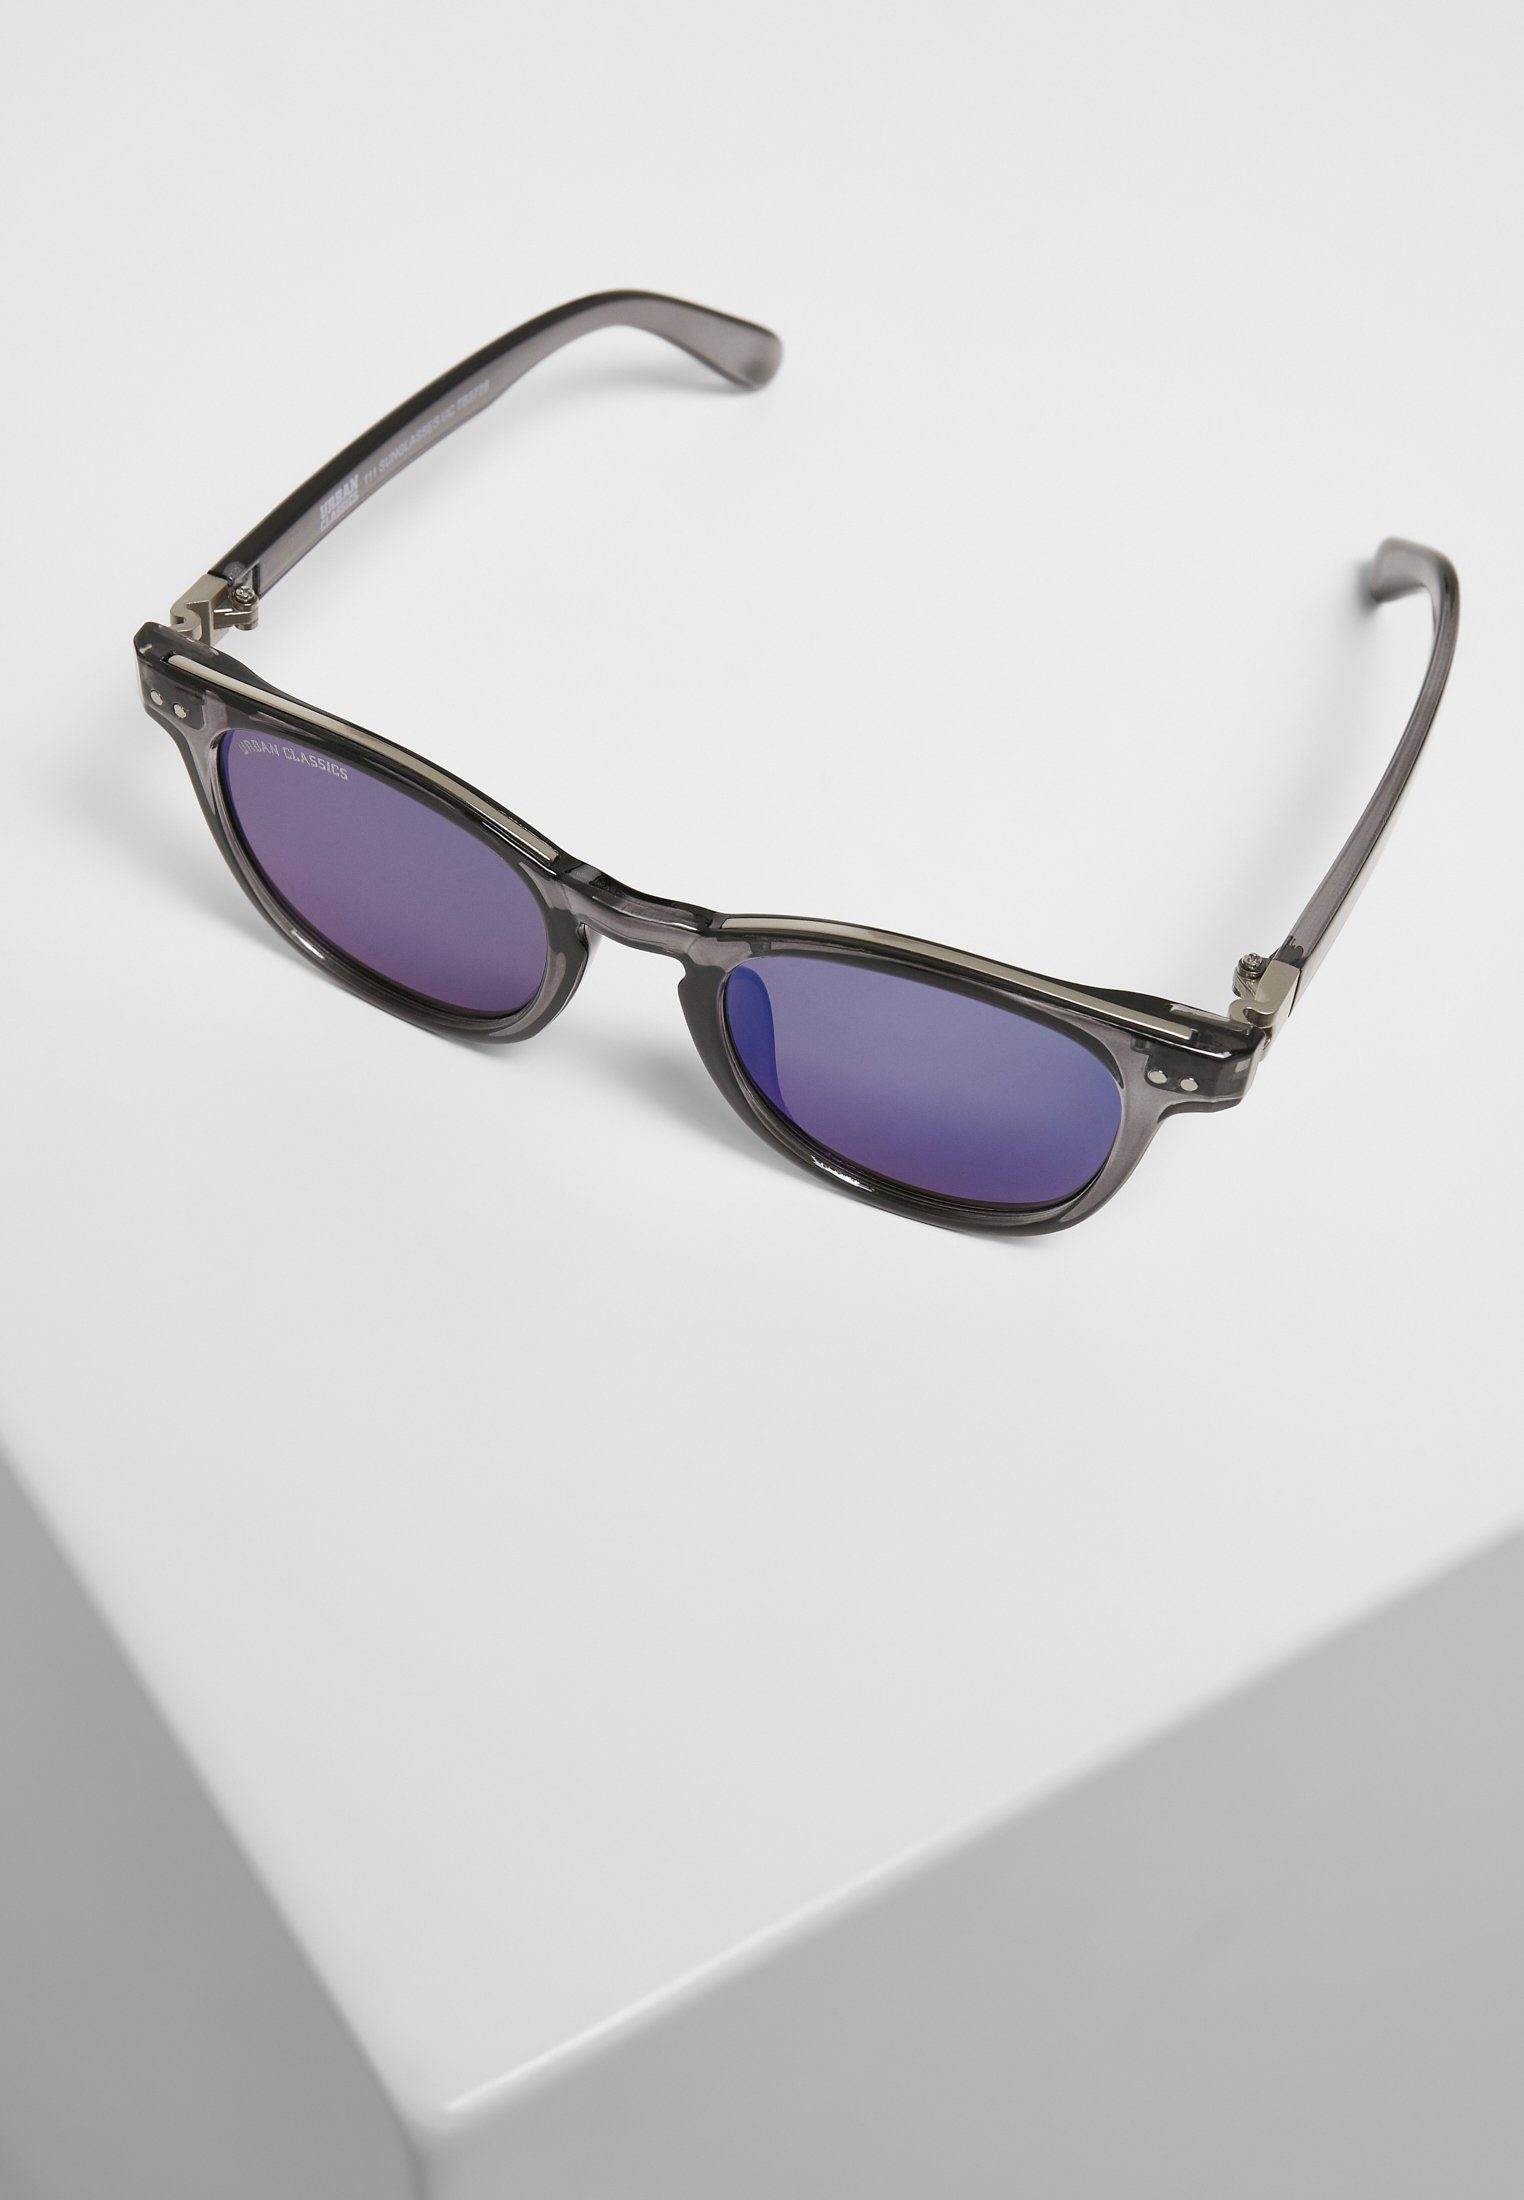 111 CLASSICS UC Sonnenbrille grey/silver Accessoires URBAN Sunglasses